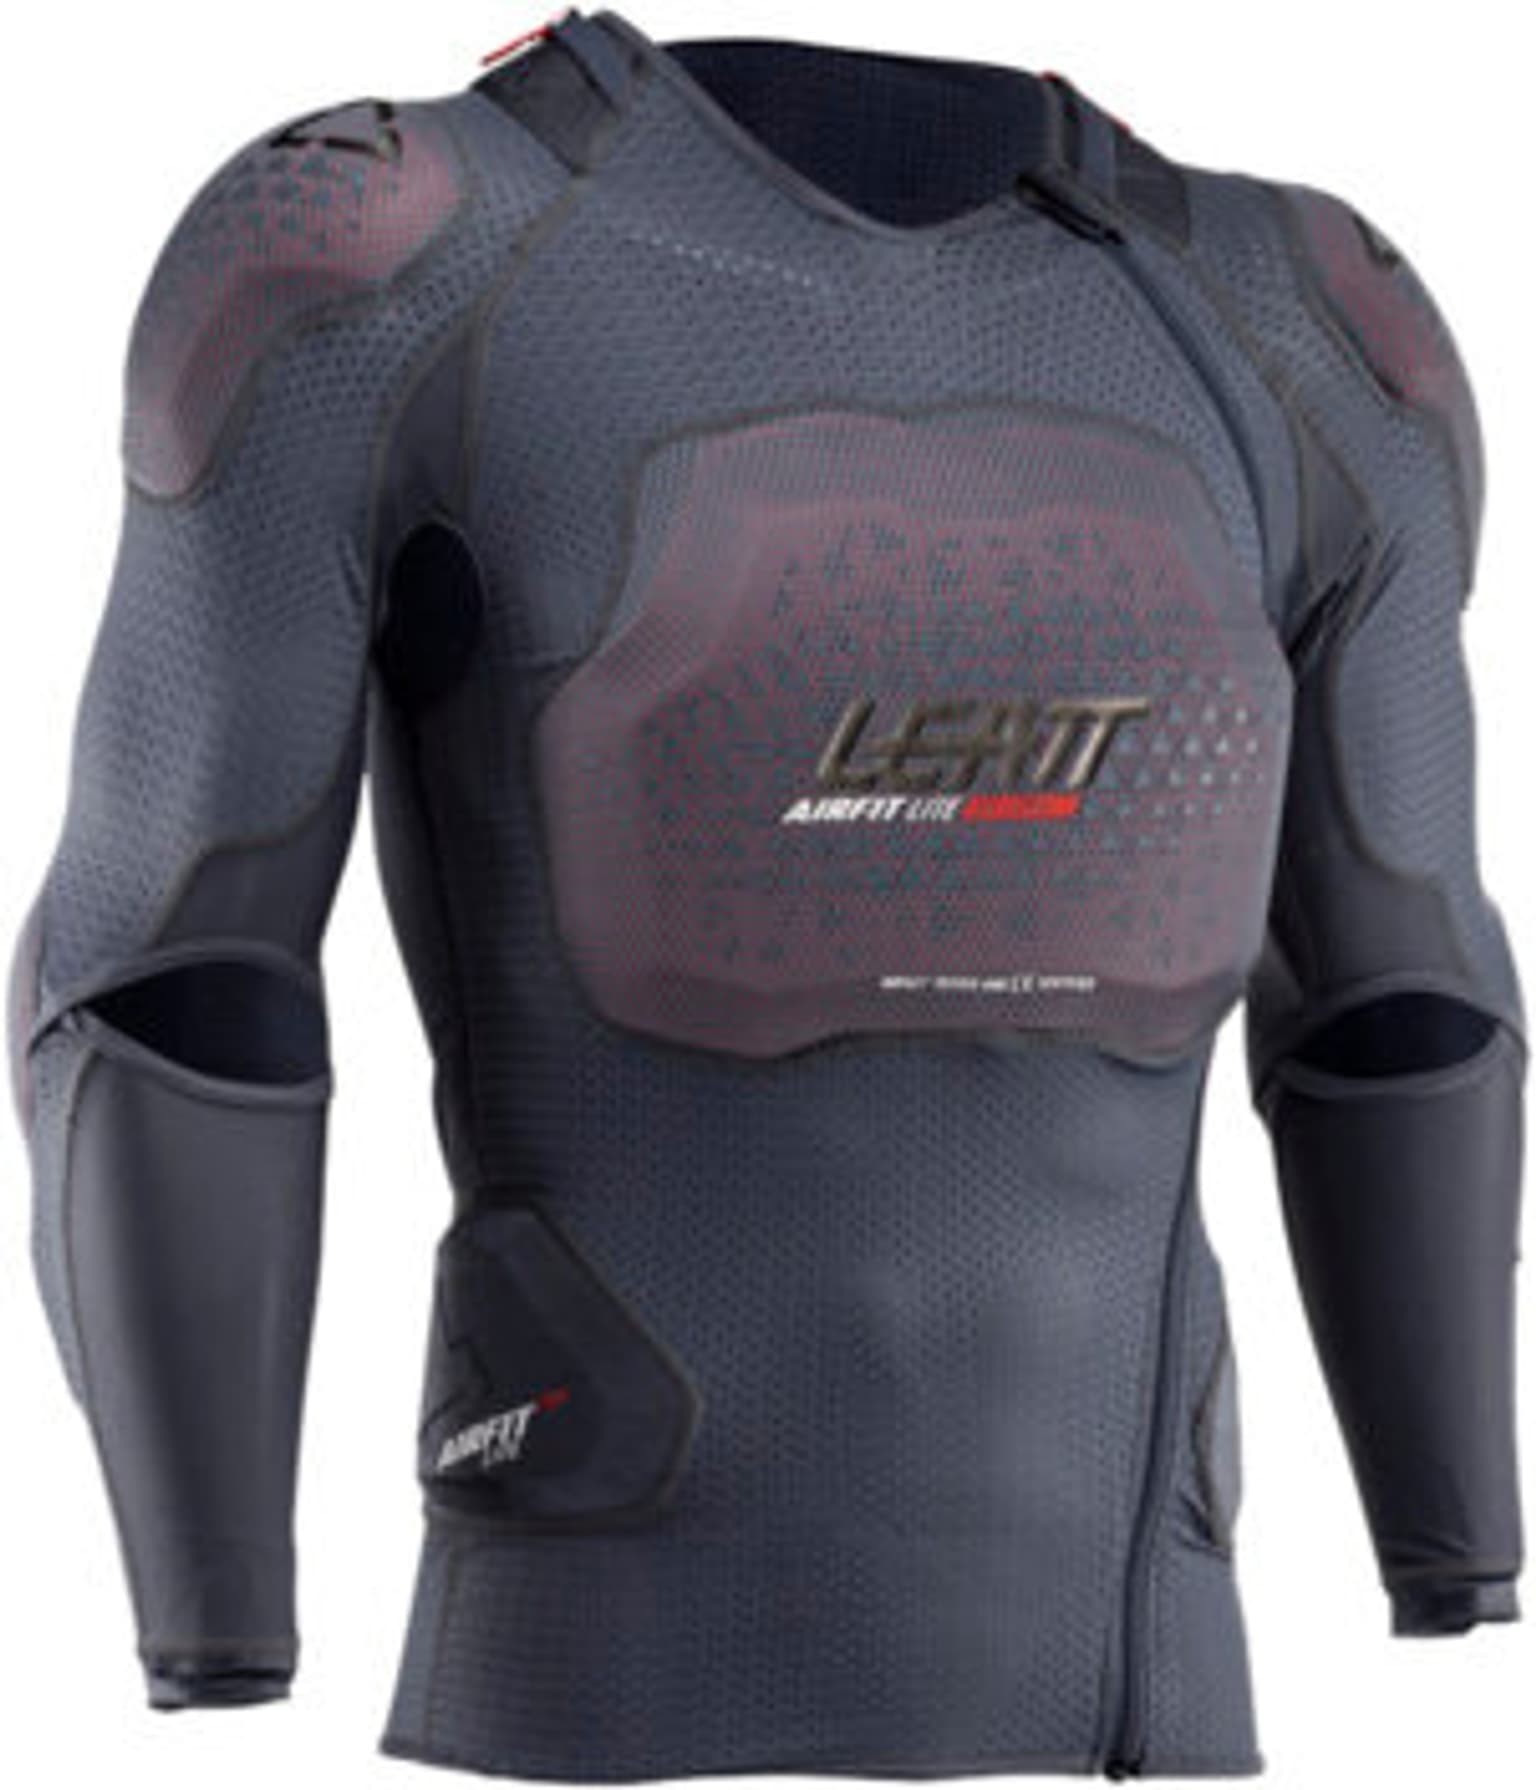 Leatt Leatt 3DF Body Protector Airfit lite Evo Protektoren nero 1